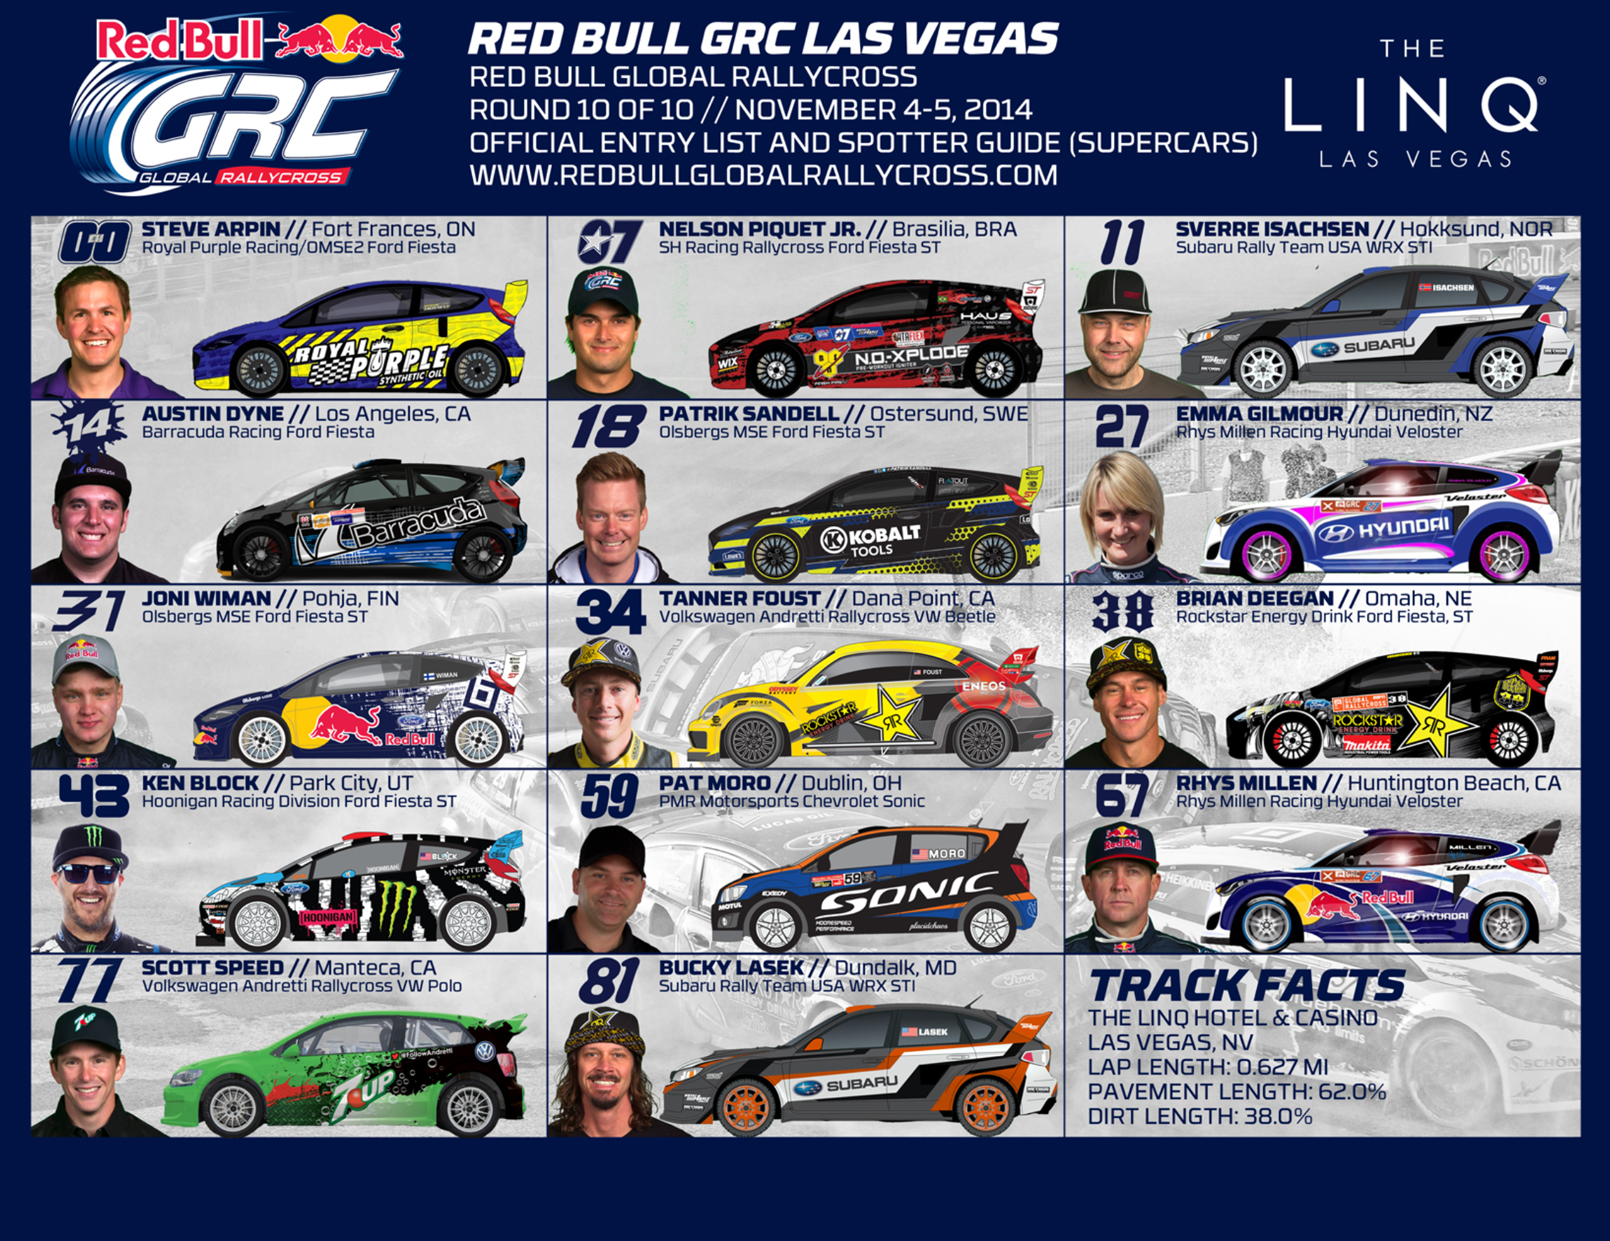 Red Bull GRC Las Vegas 2014